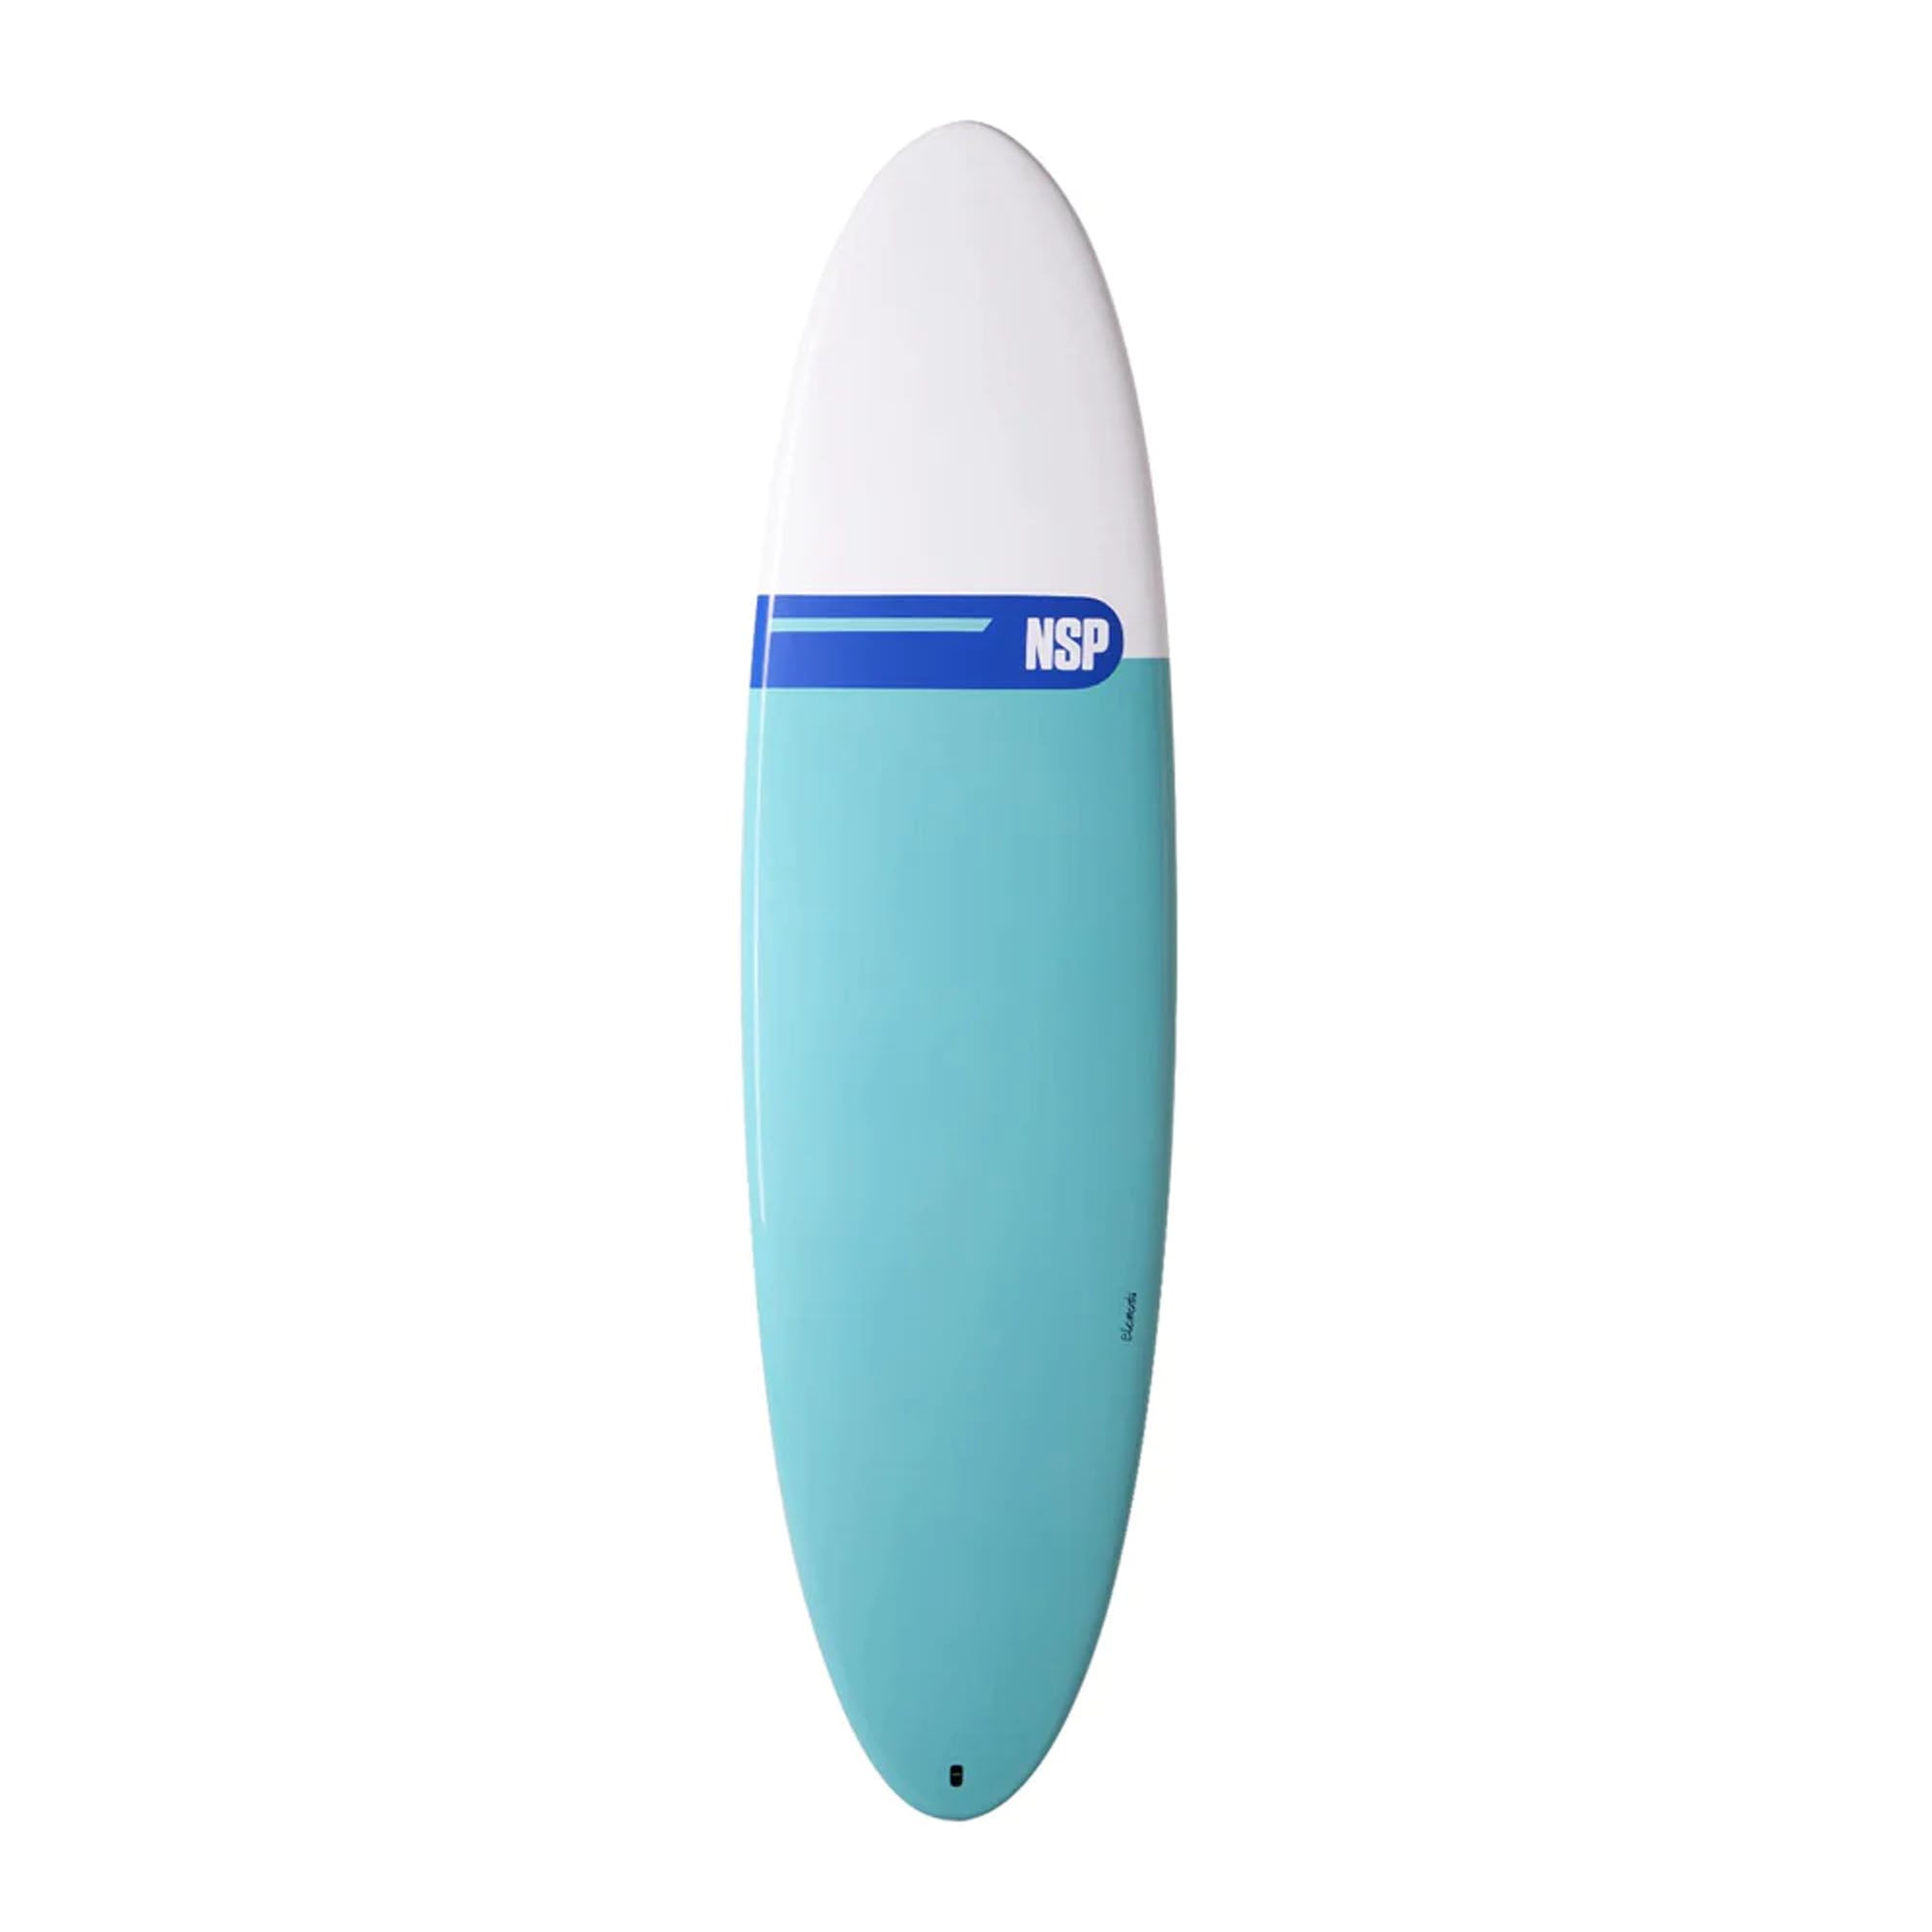 NSP Elements HDT Funboard Surfboard